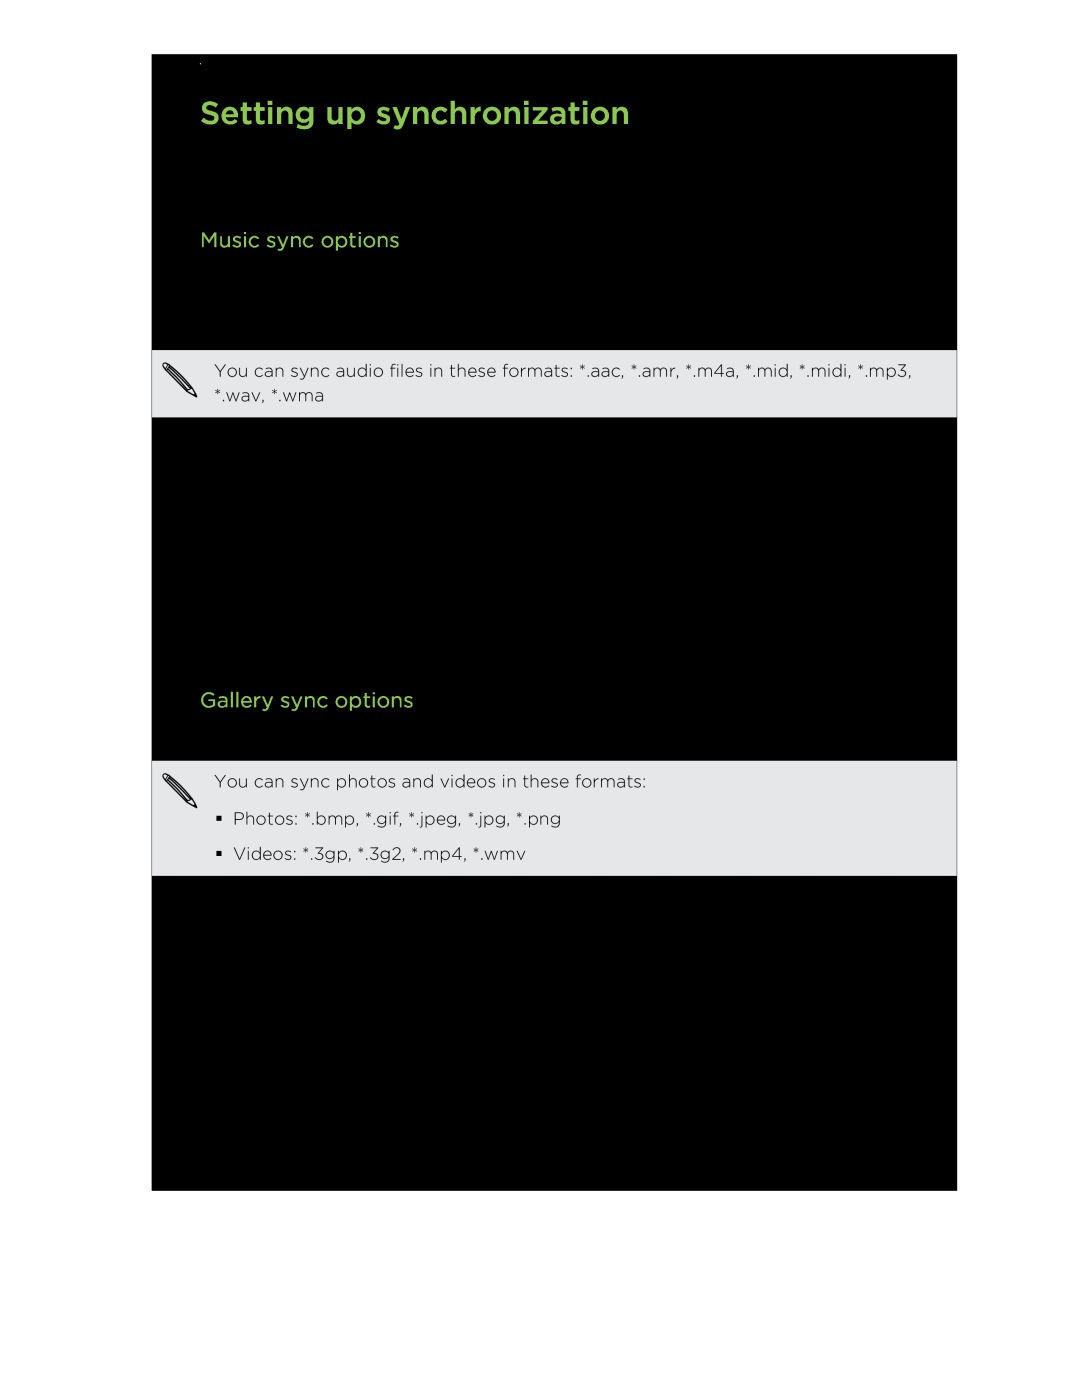 HTC HTCFlyerP512 manual Setting up synchronization, Music sync options, Gallery sync options 